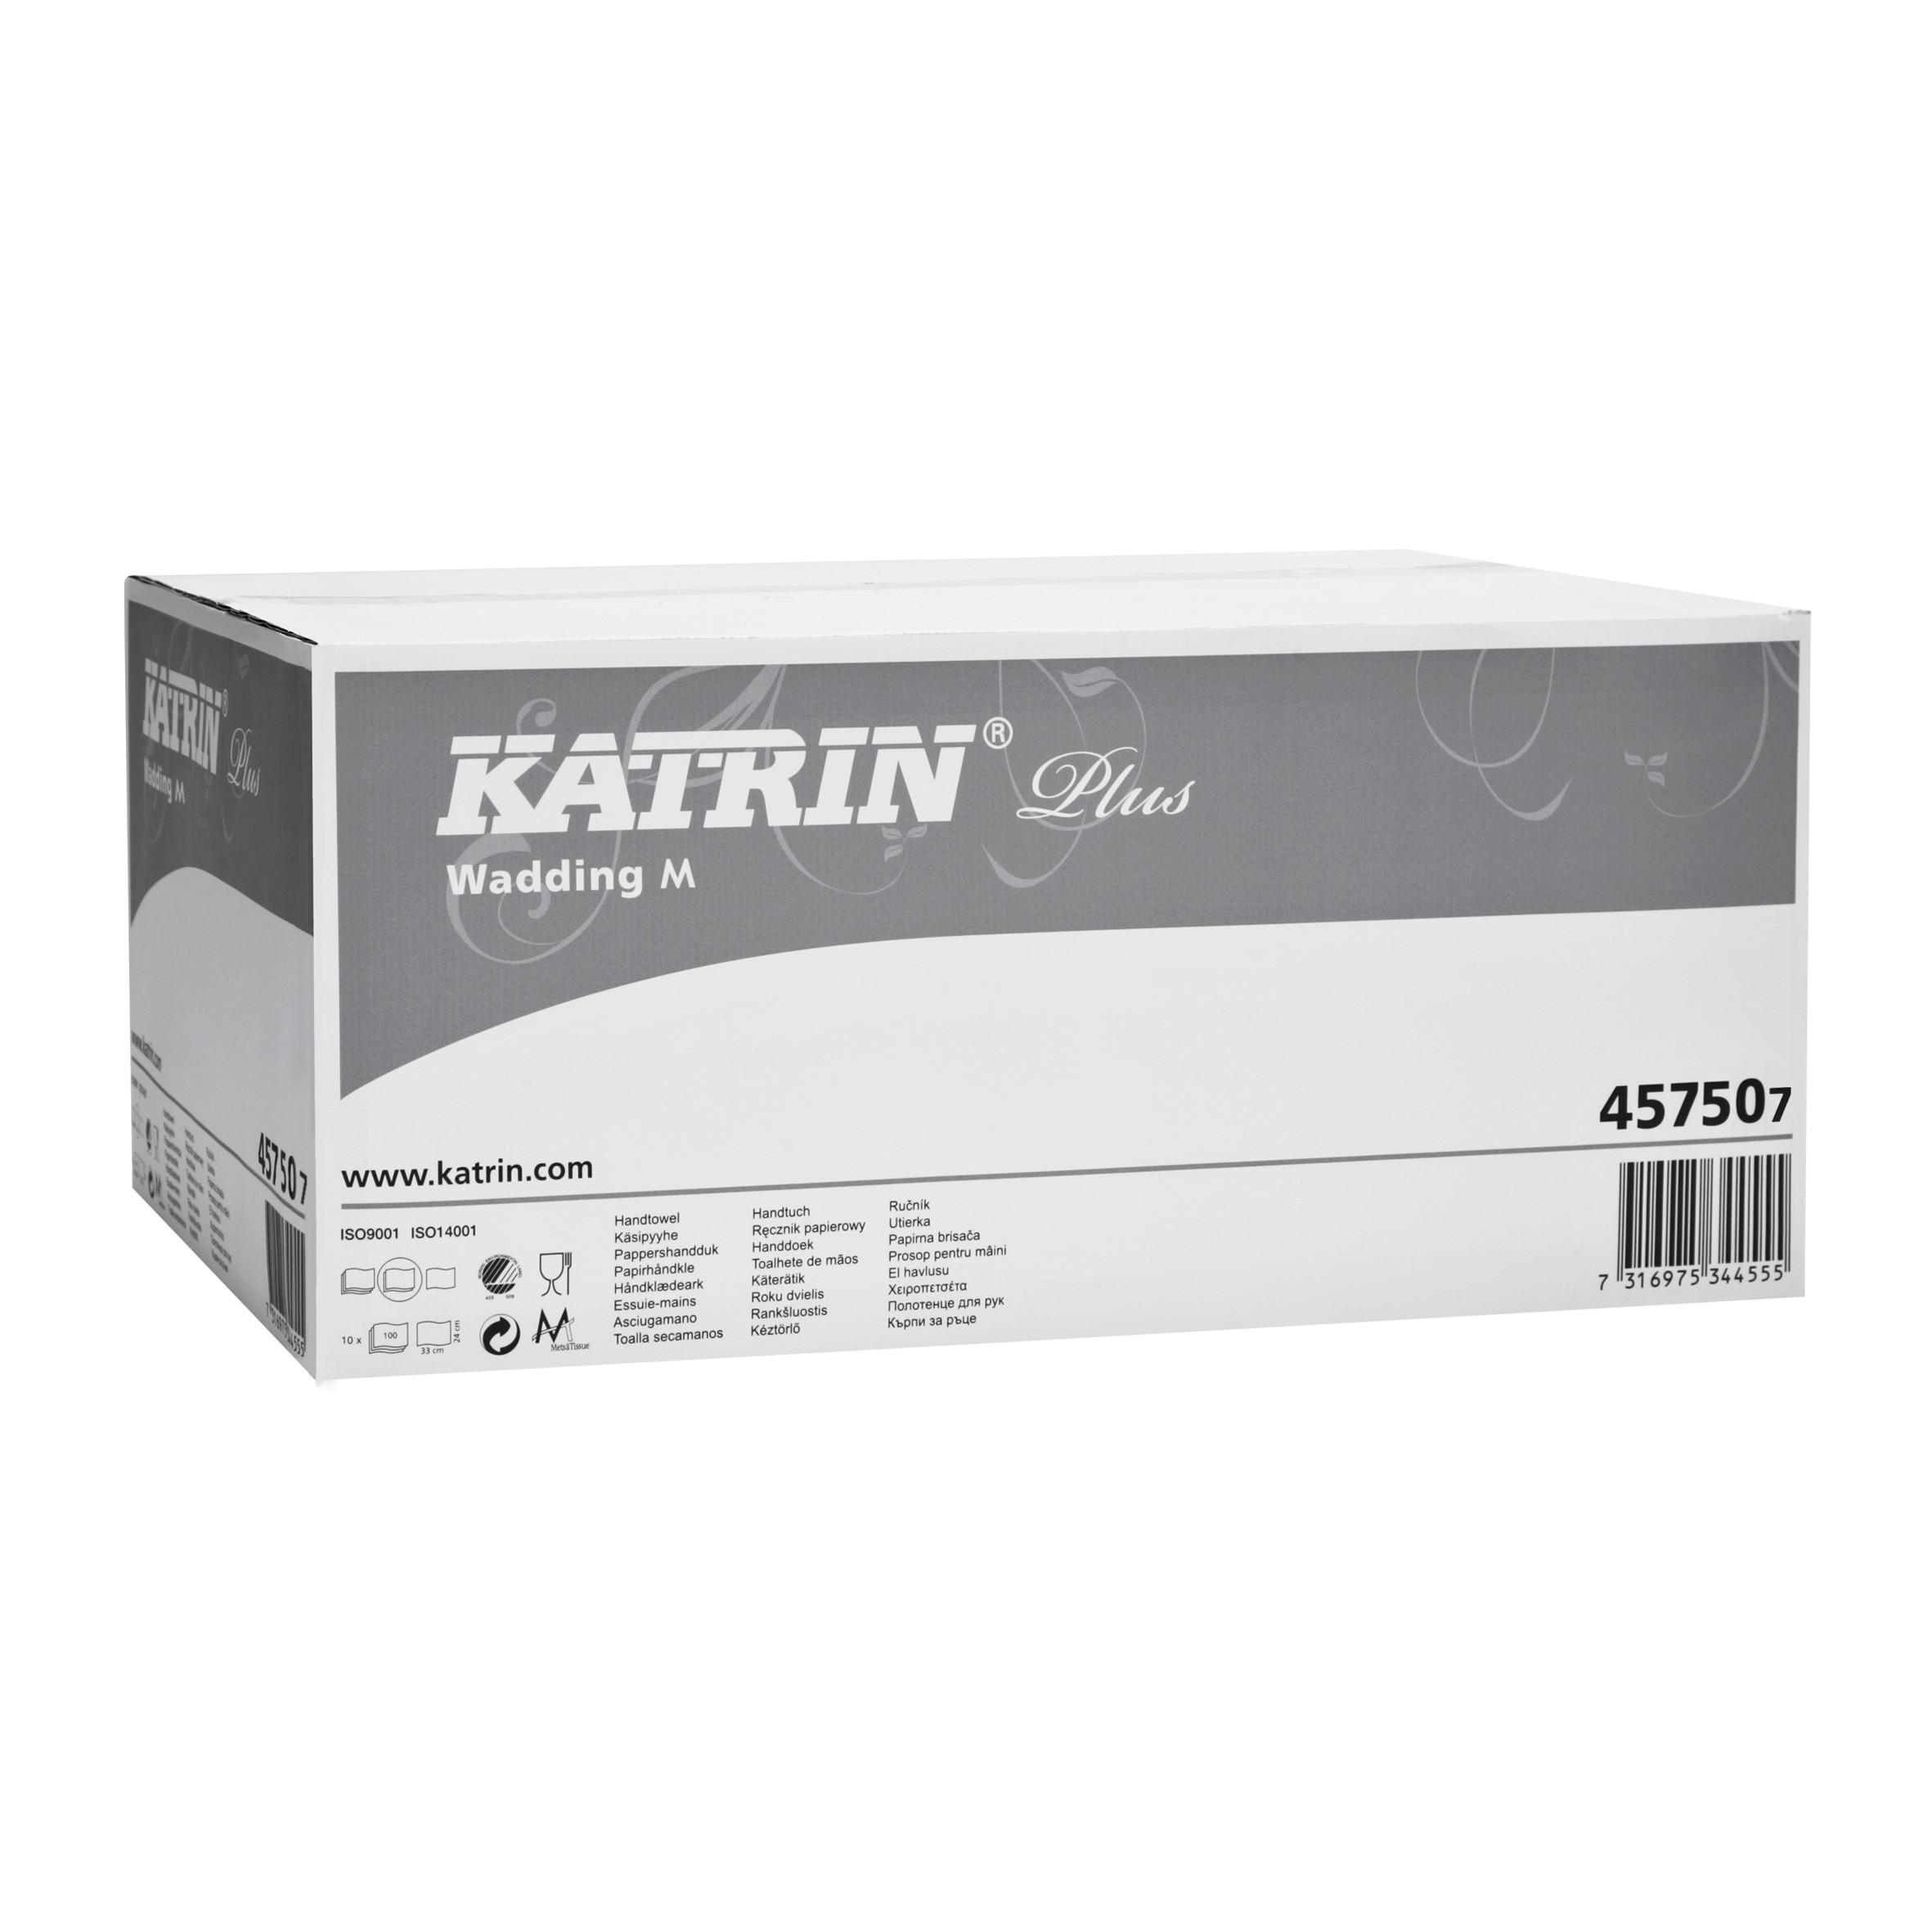 Katrin Plus Wadding M 10Kg